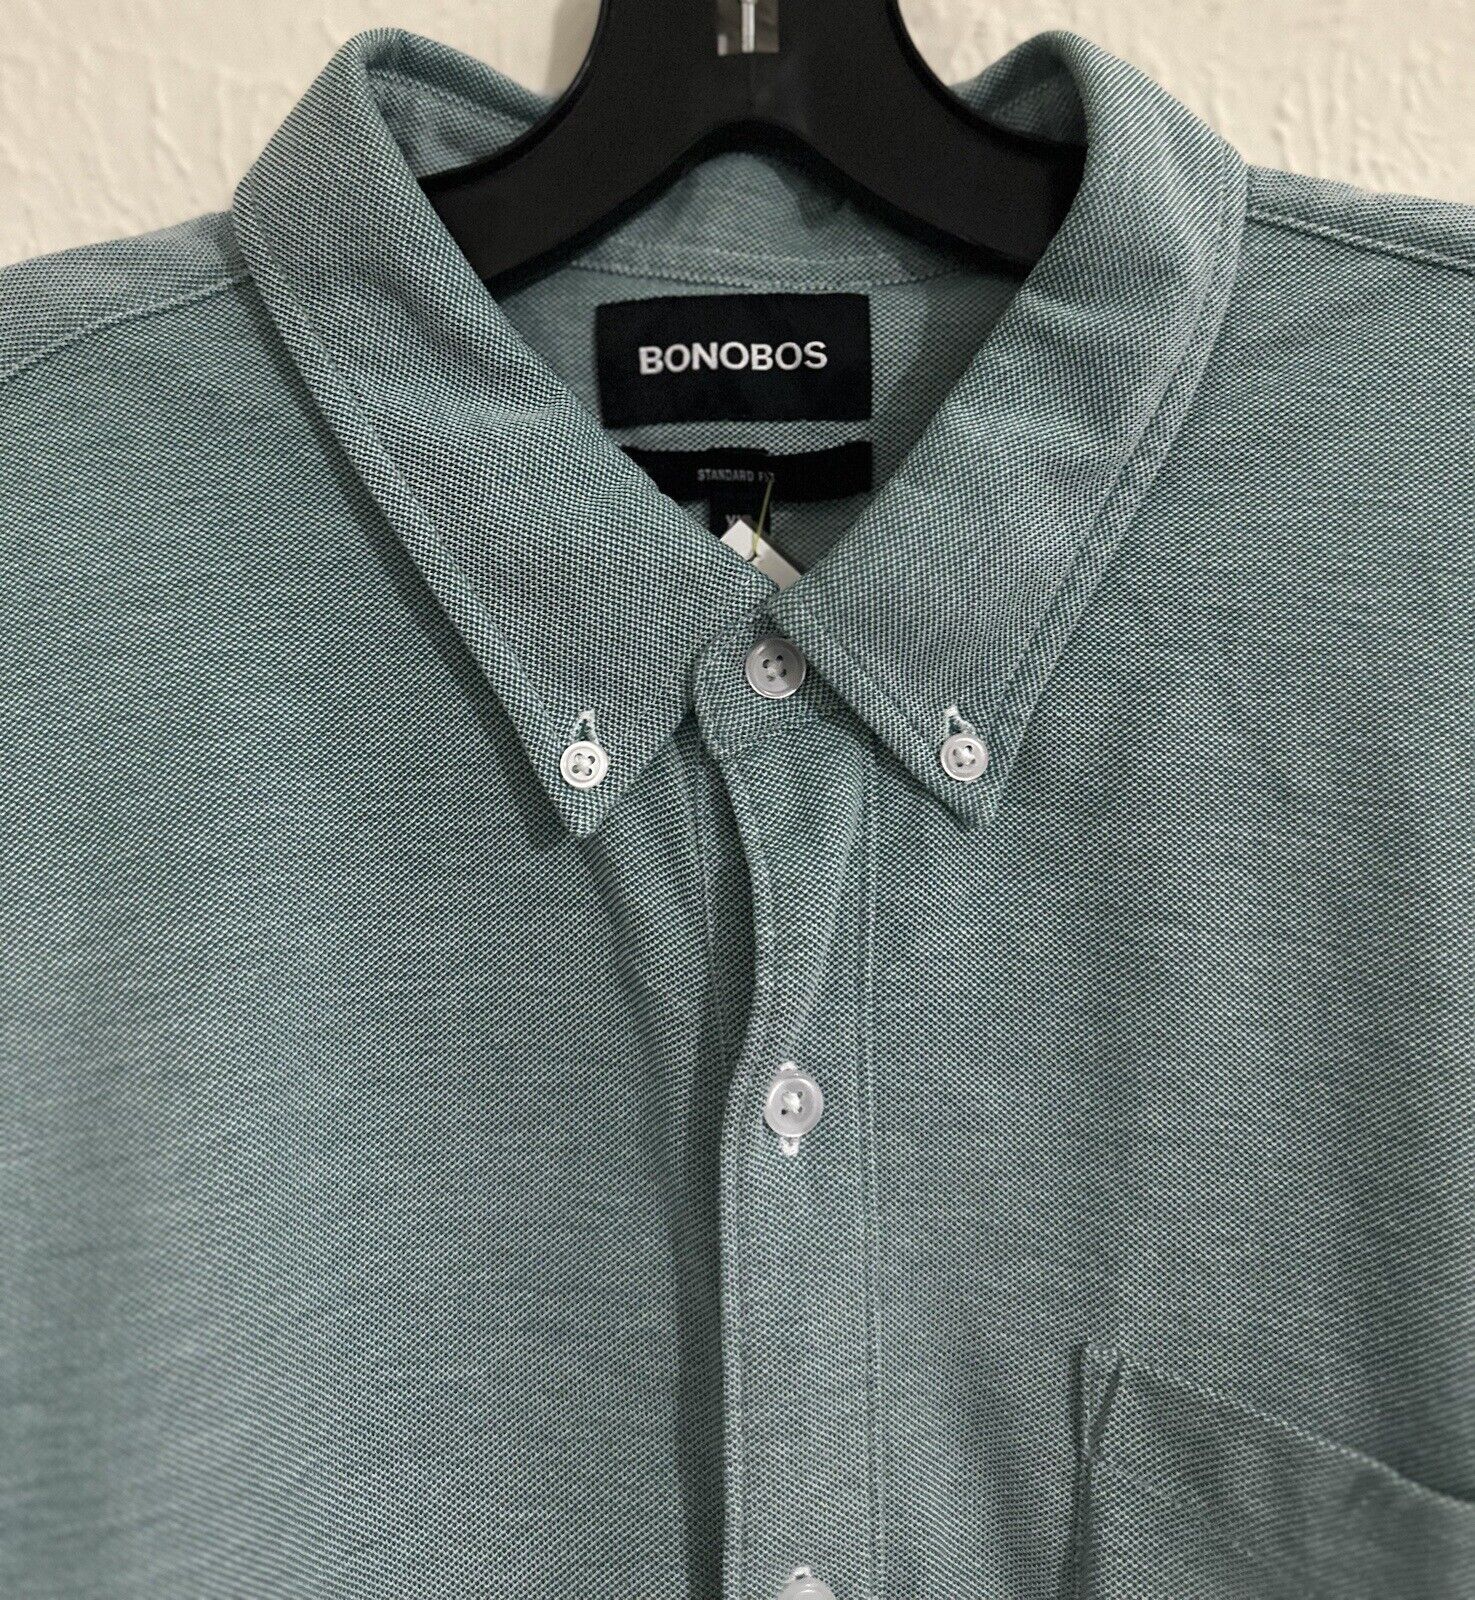 Bonobos Men’s Standard Fit Shirt XXL - image 2